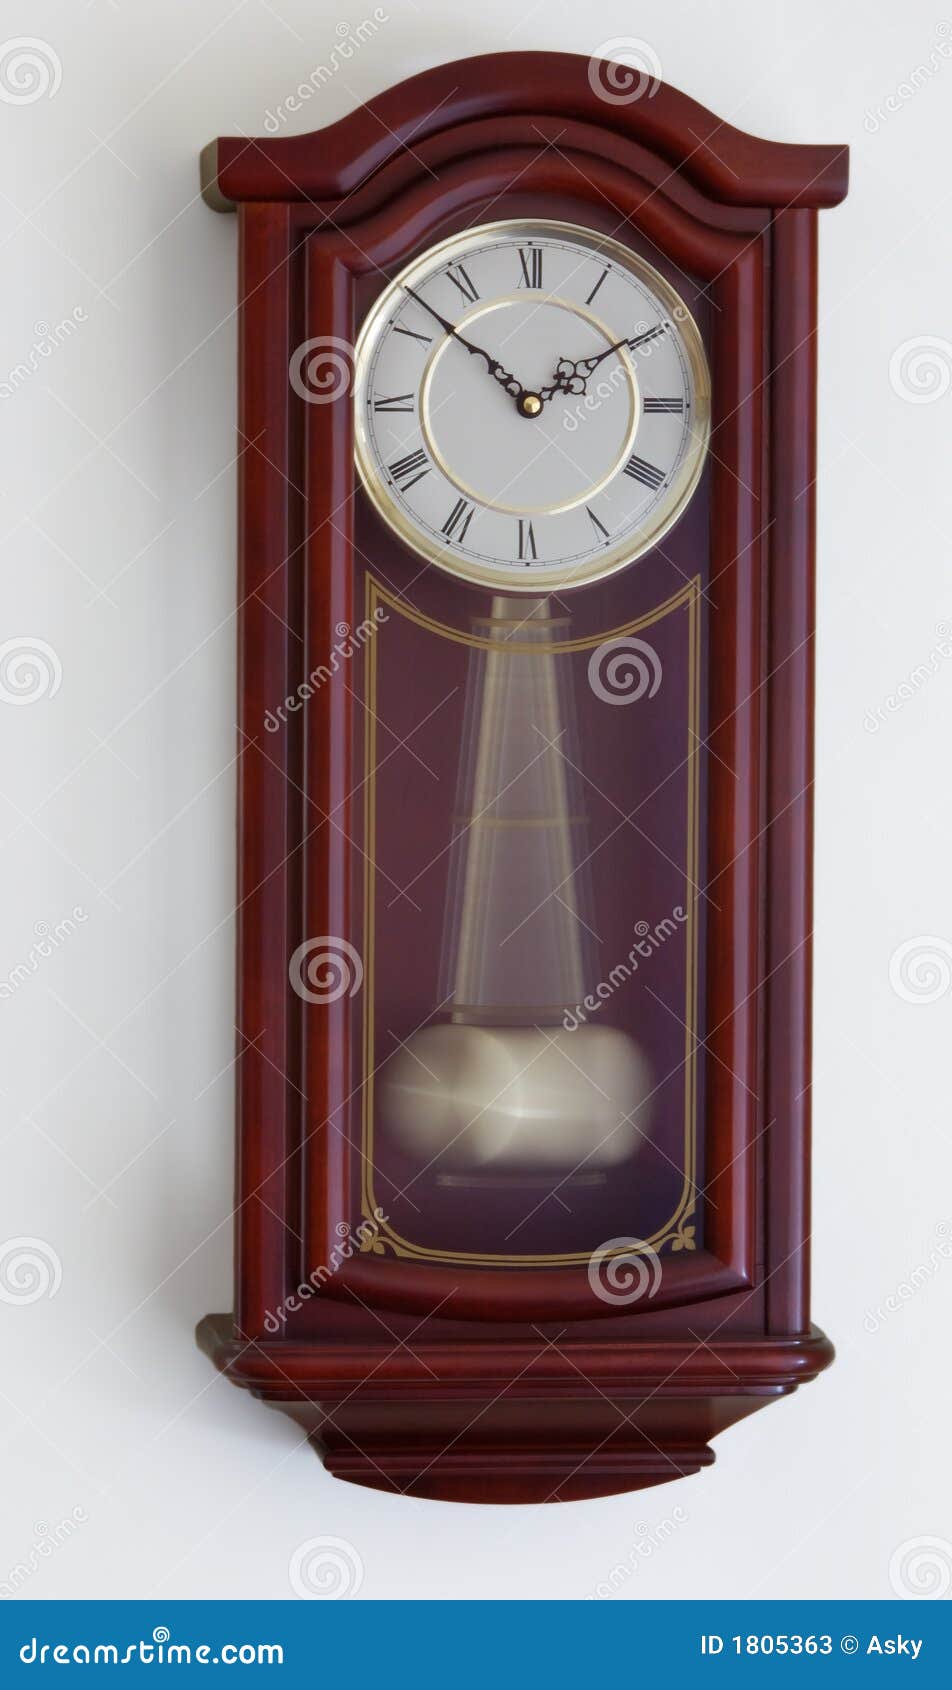 Pendulum clock stock image. Image of clock, interior, metal - 1805363